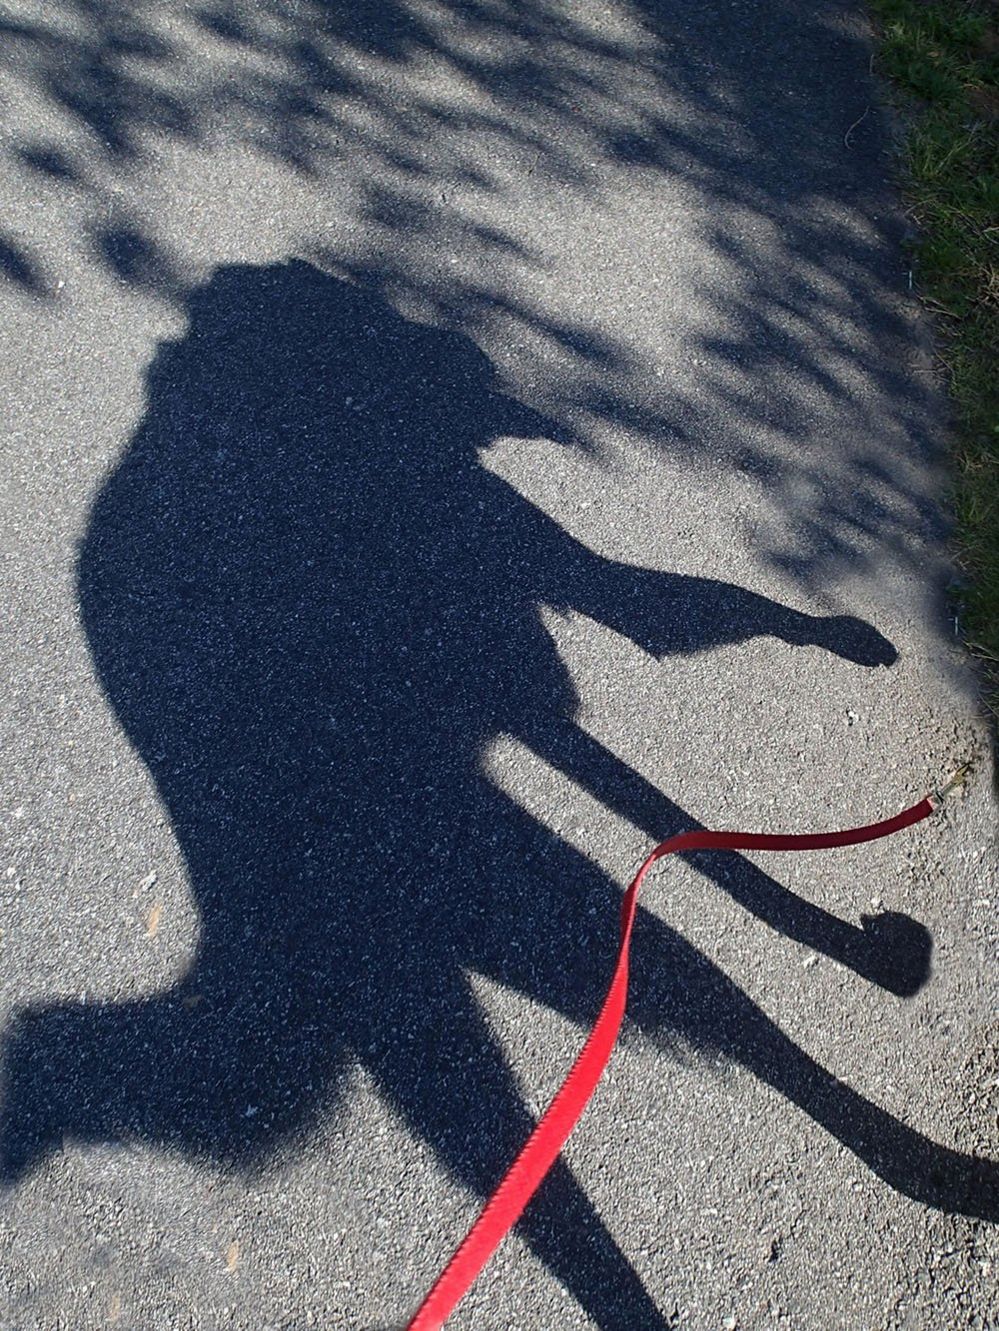 Shadow of a dog